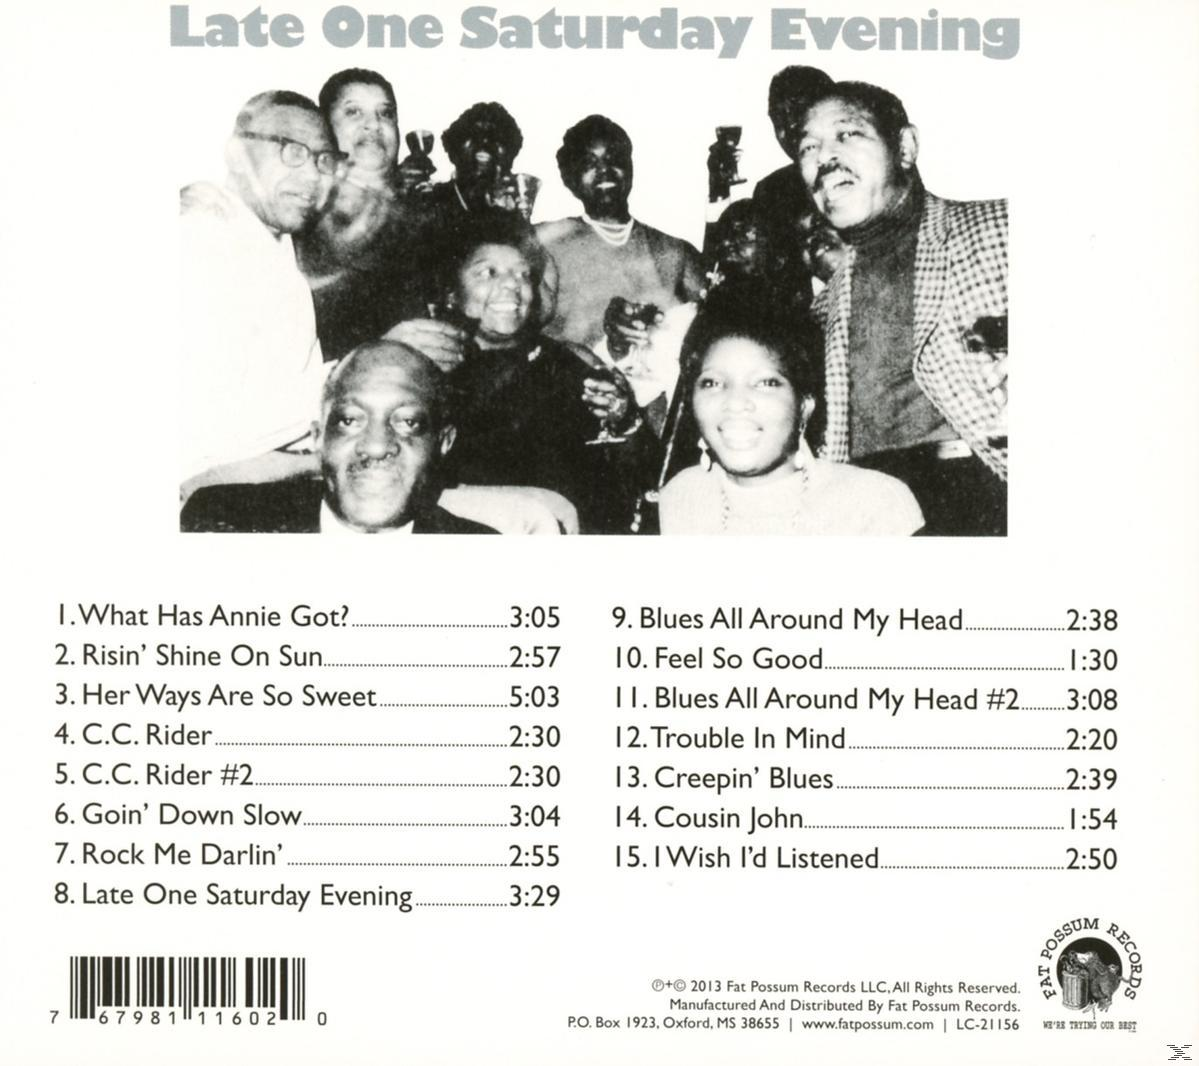 Alec Seward - Late Evening One Saturday (CD) 